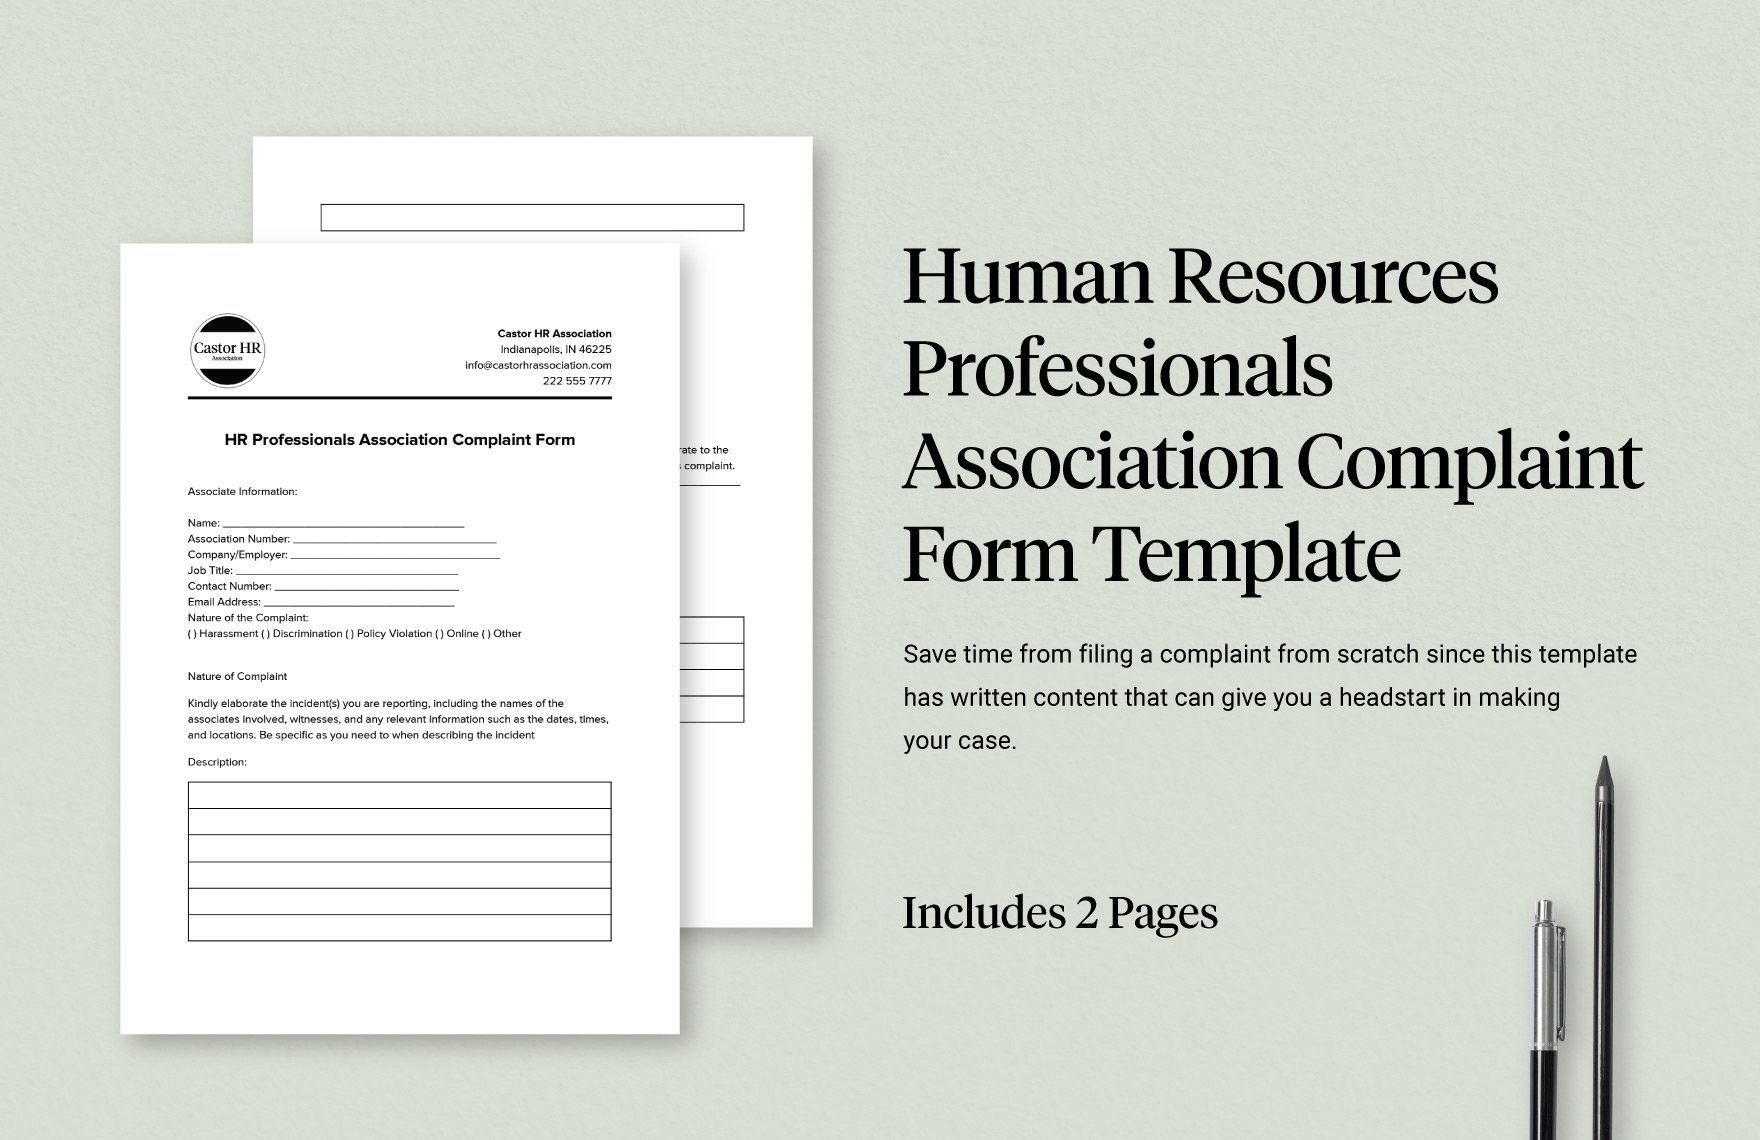 Human Resources Professionals Association Complaint Form Template